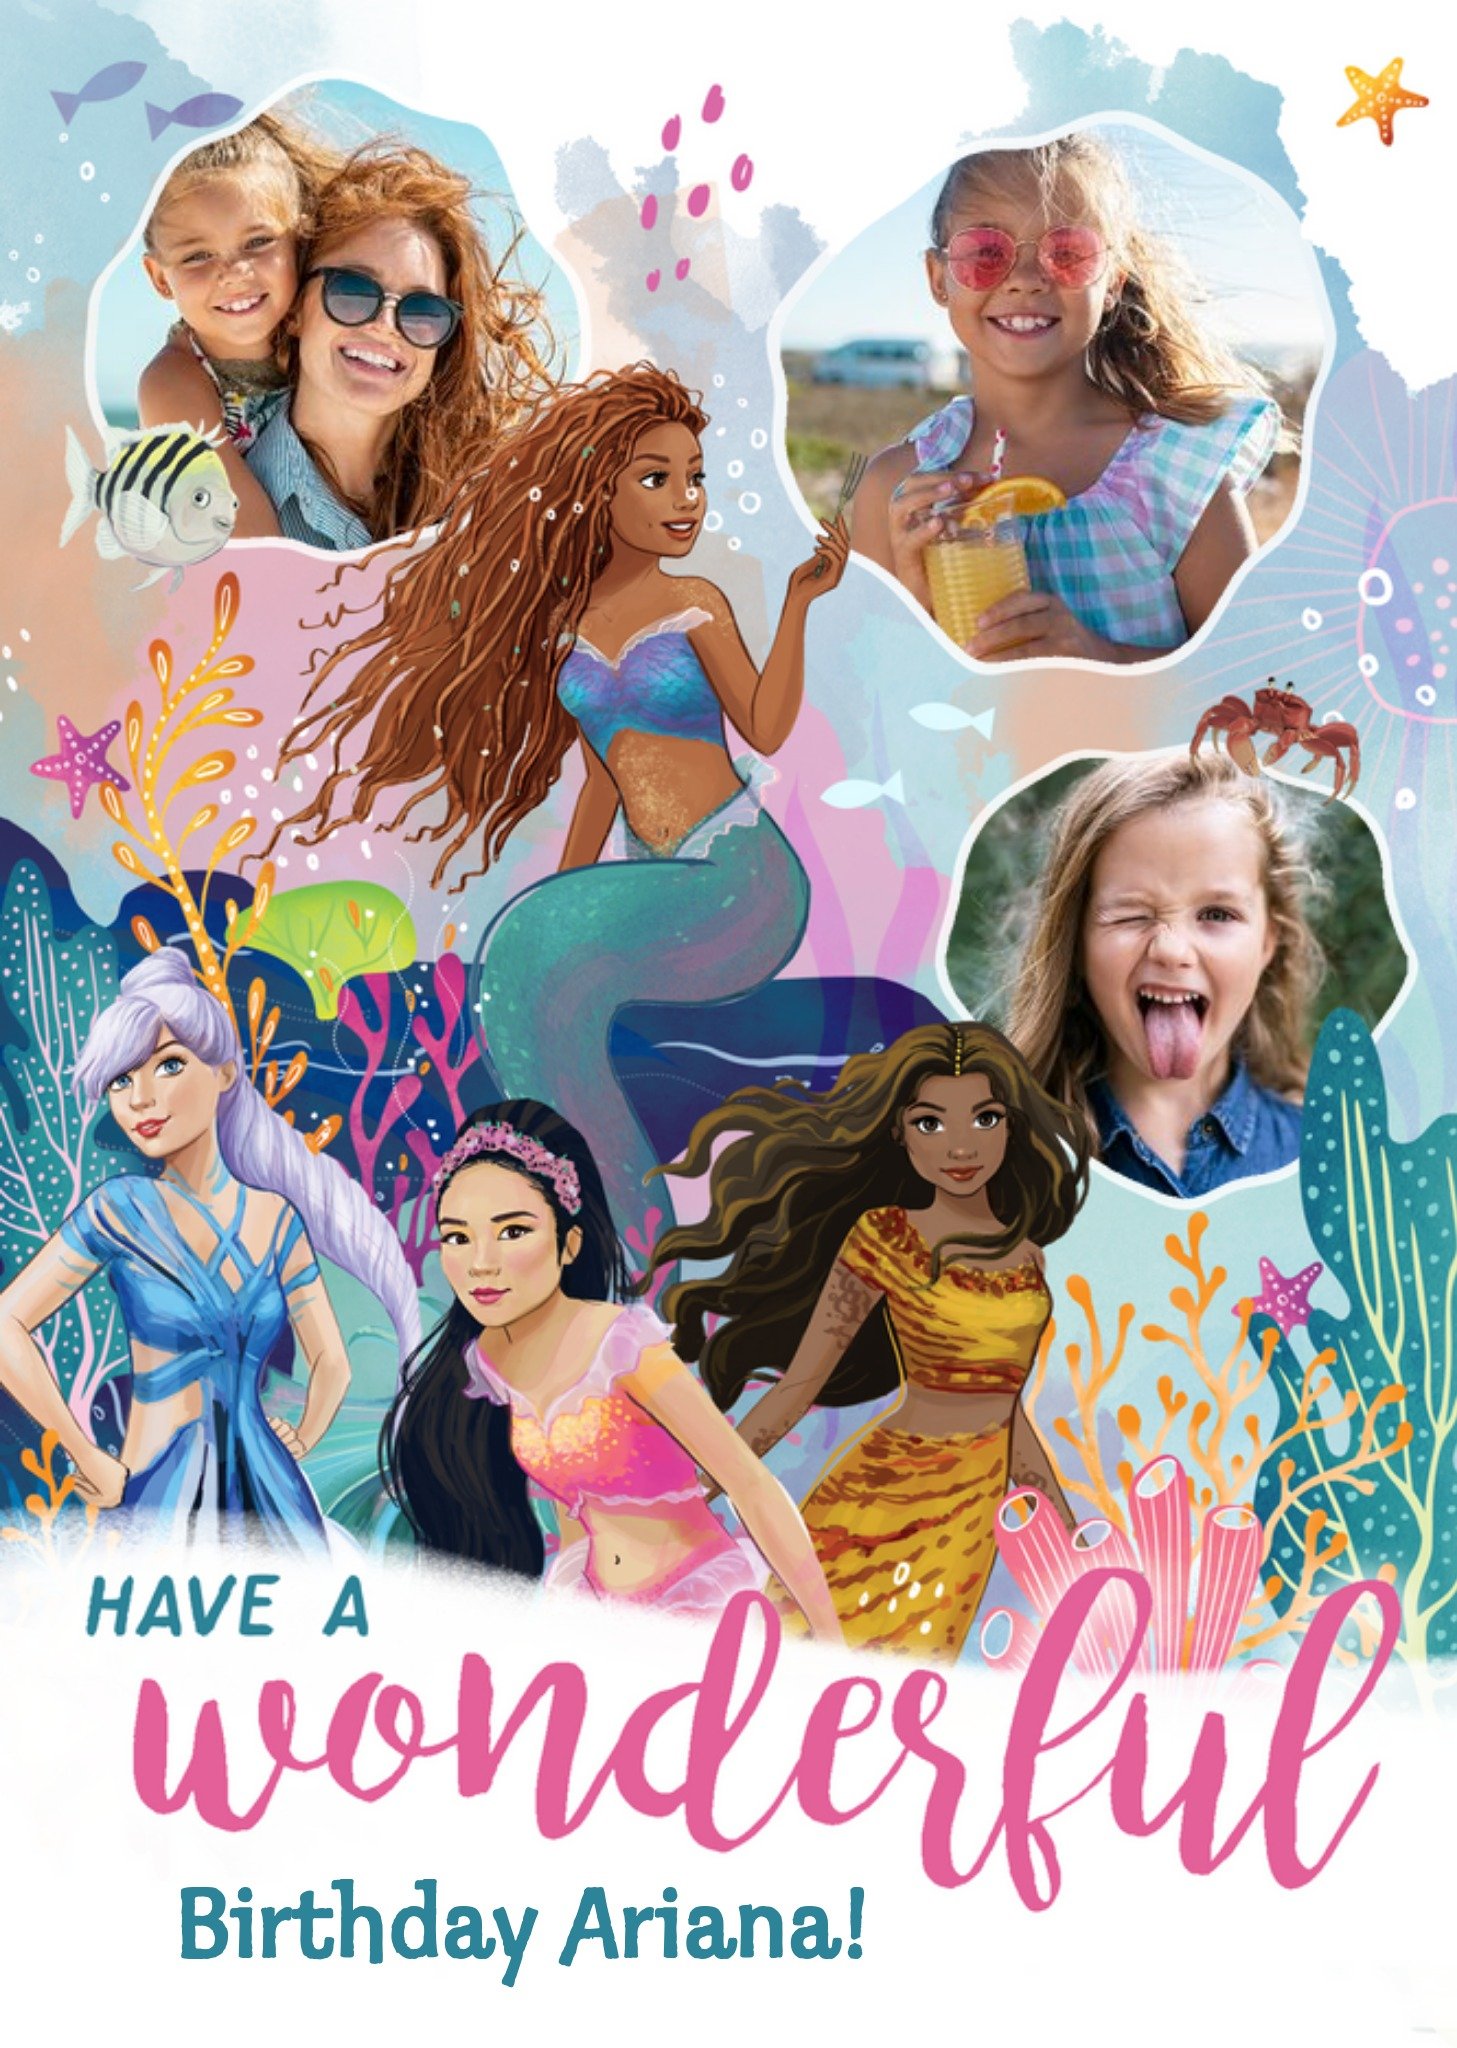 Disney Princess The Little Mermaid Movie Wonderful Birthday Photo Upload Card, Large